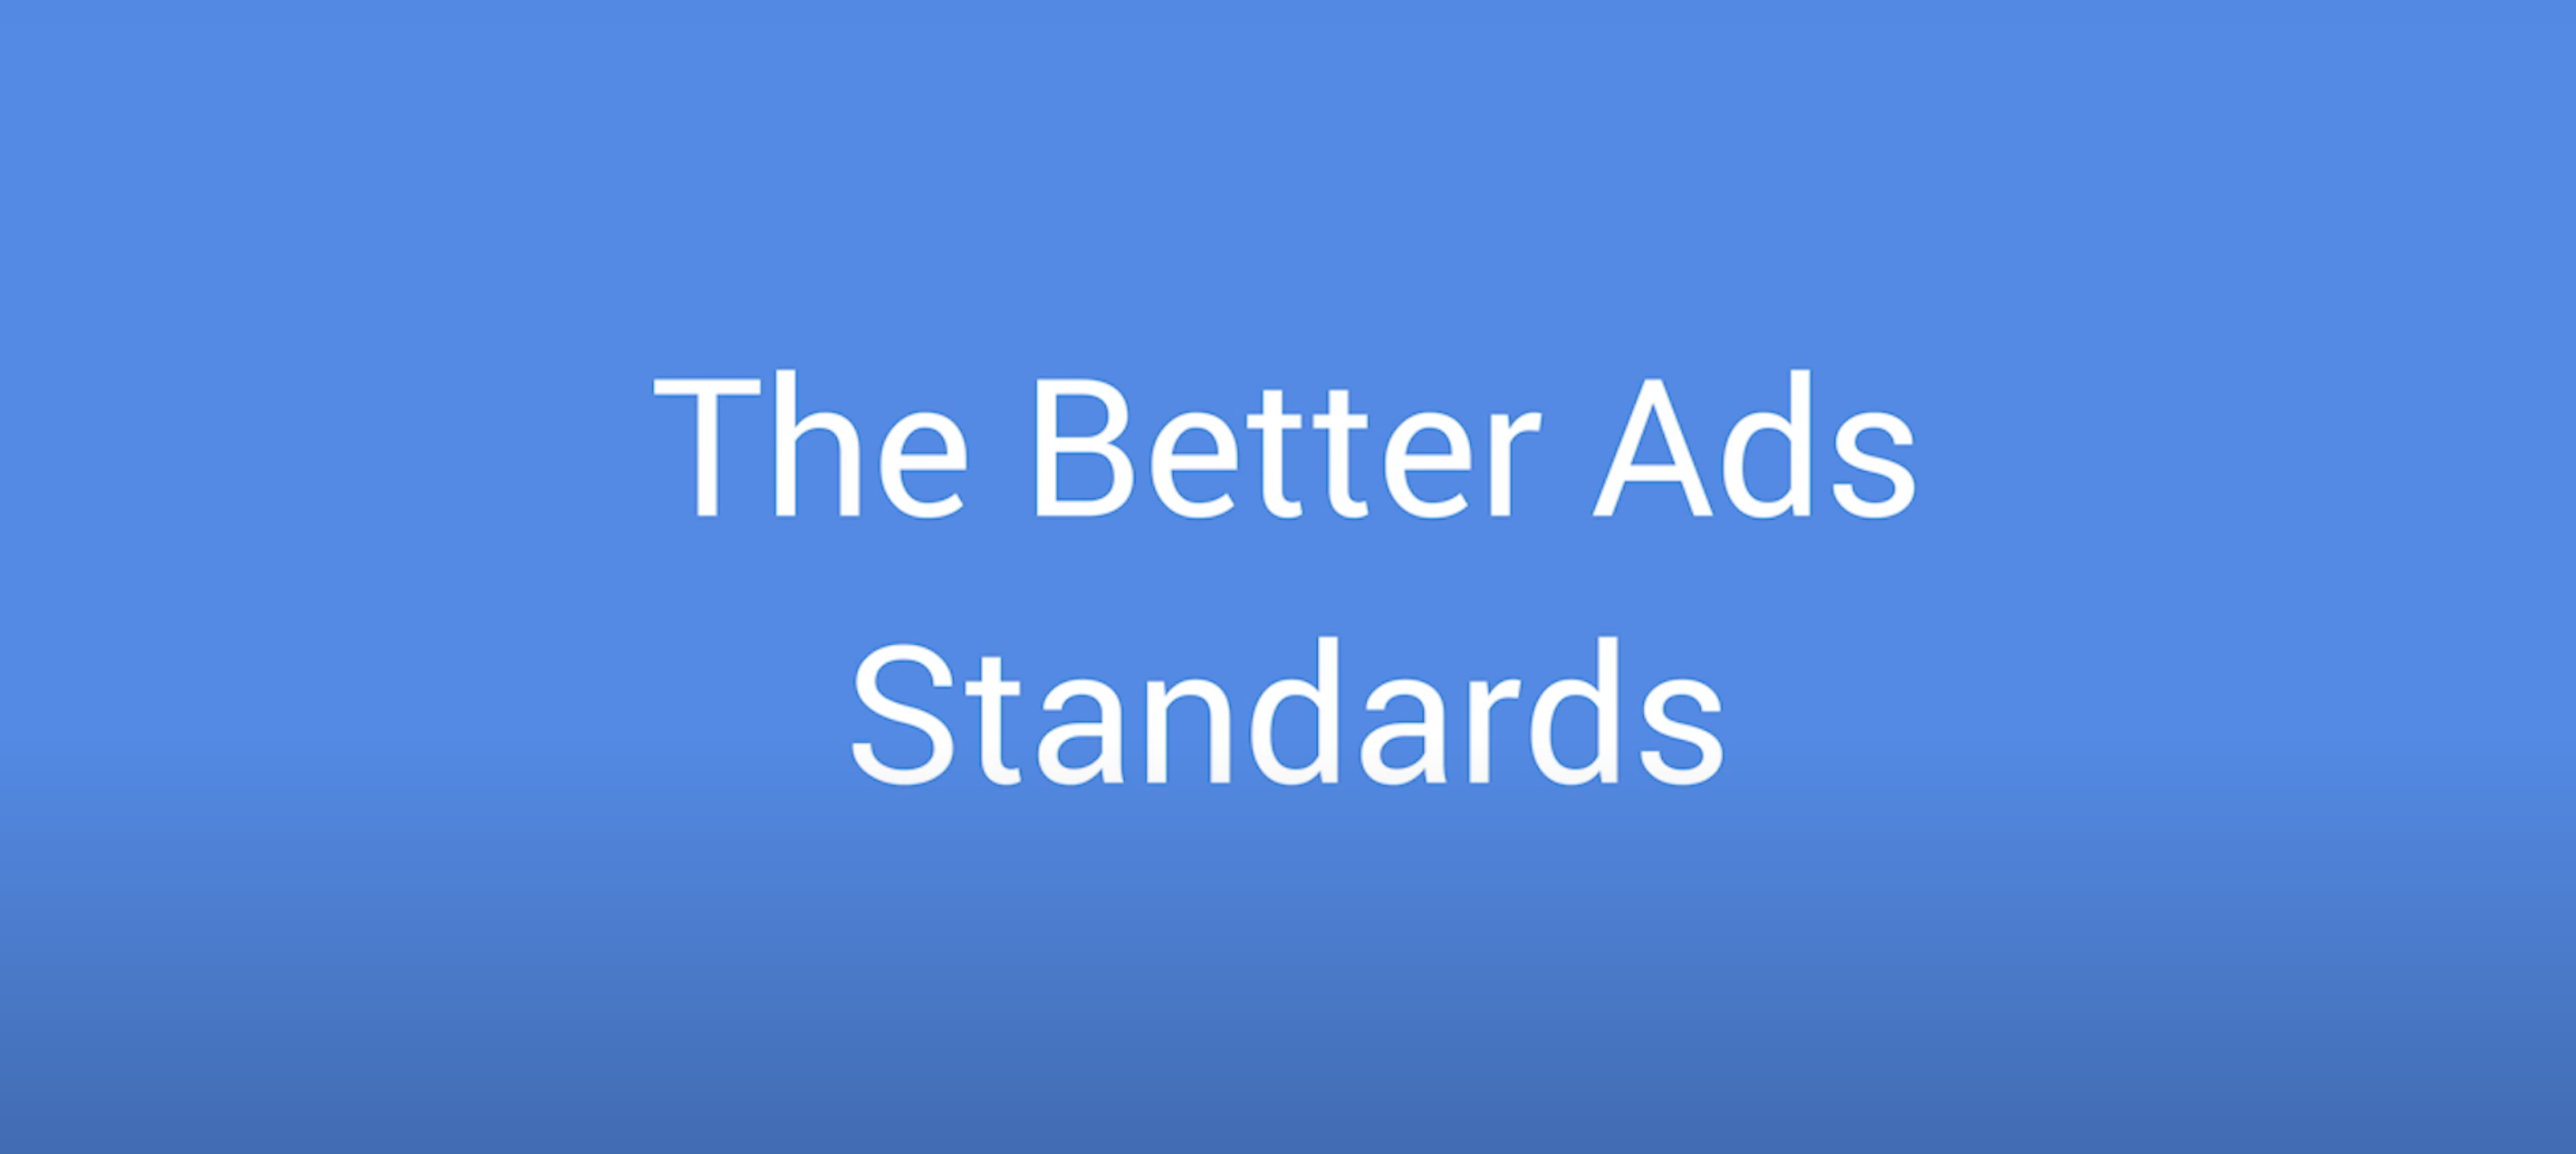 Google Adsense广告展示位置优化建议